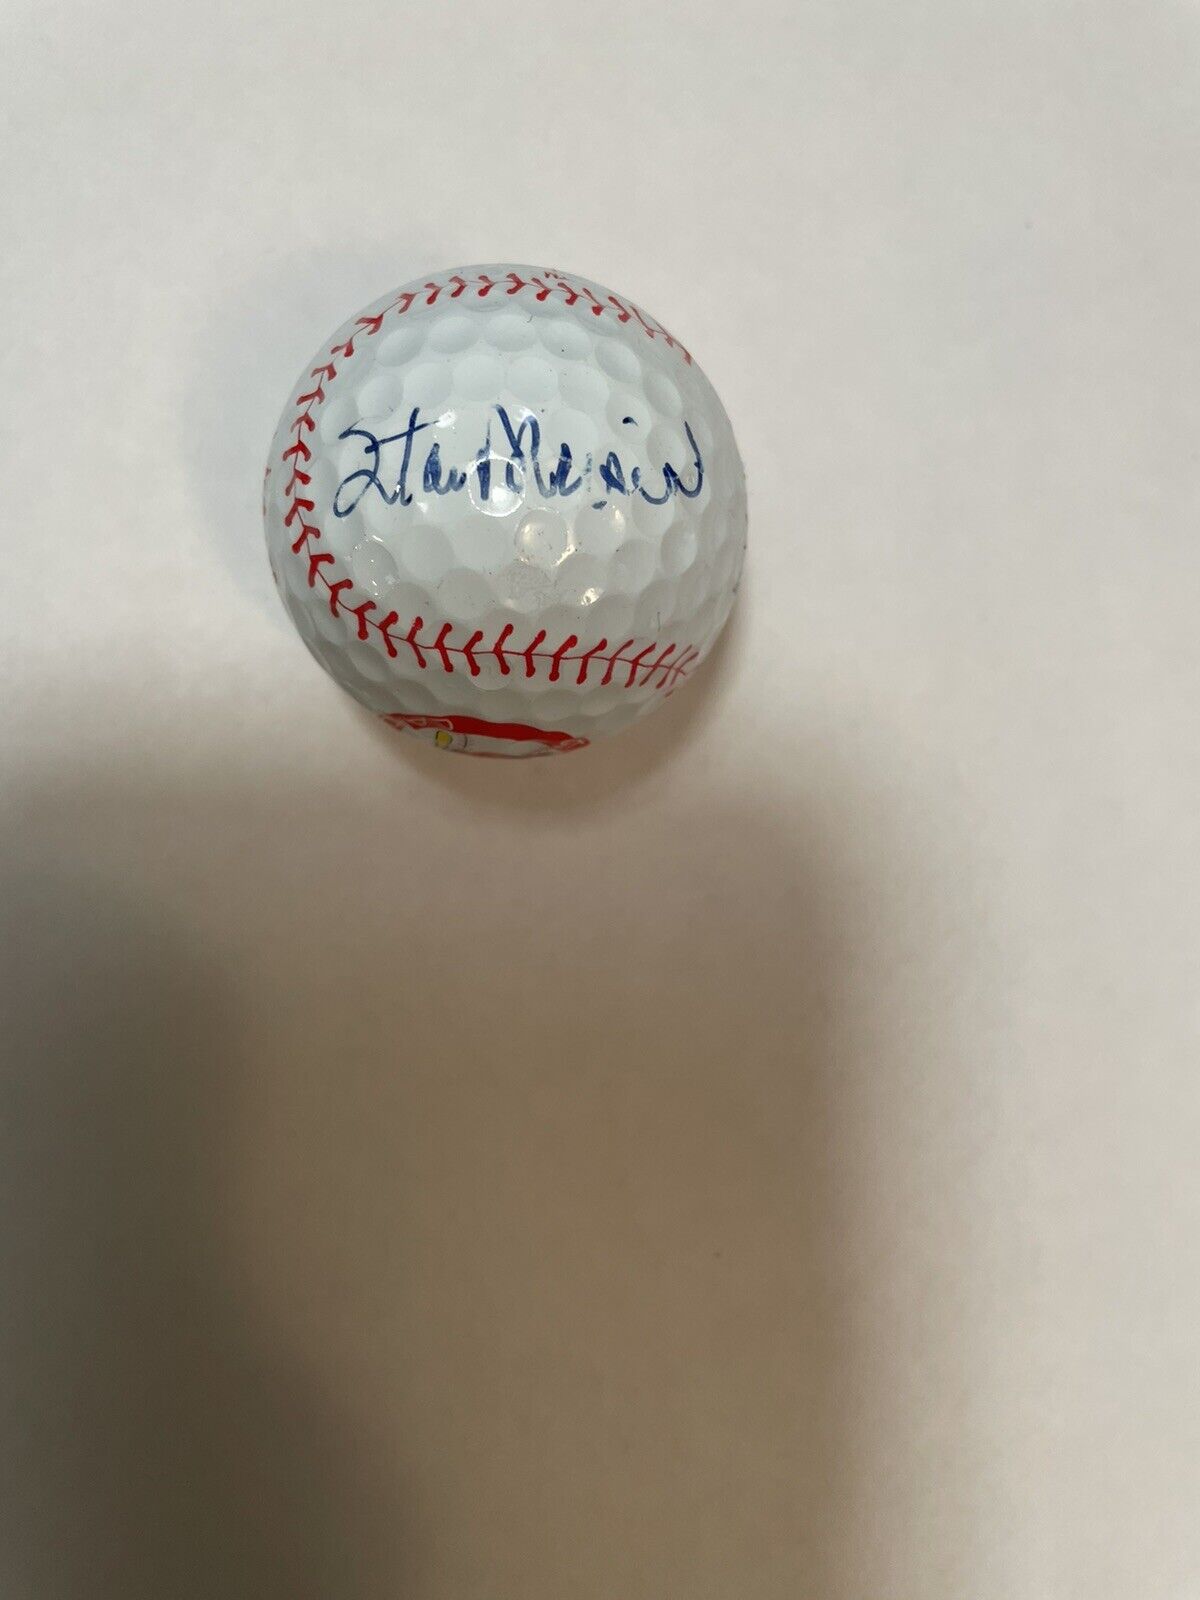 Stan Musial Signed Golf Ball (looks like baseball) St. Louis Cardinals HOF